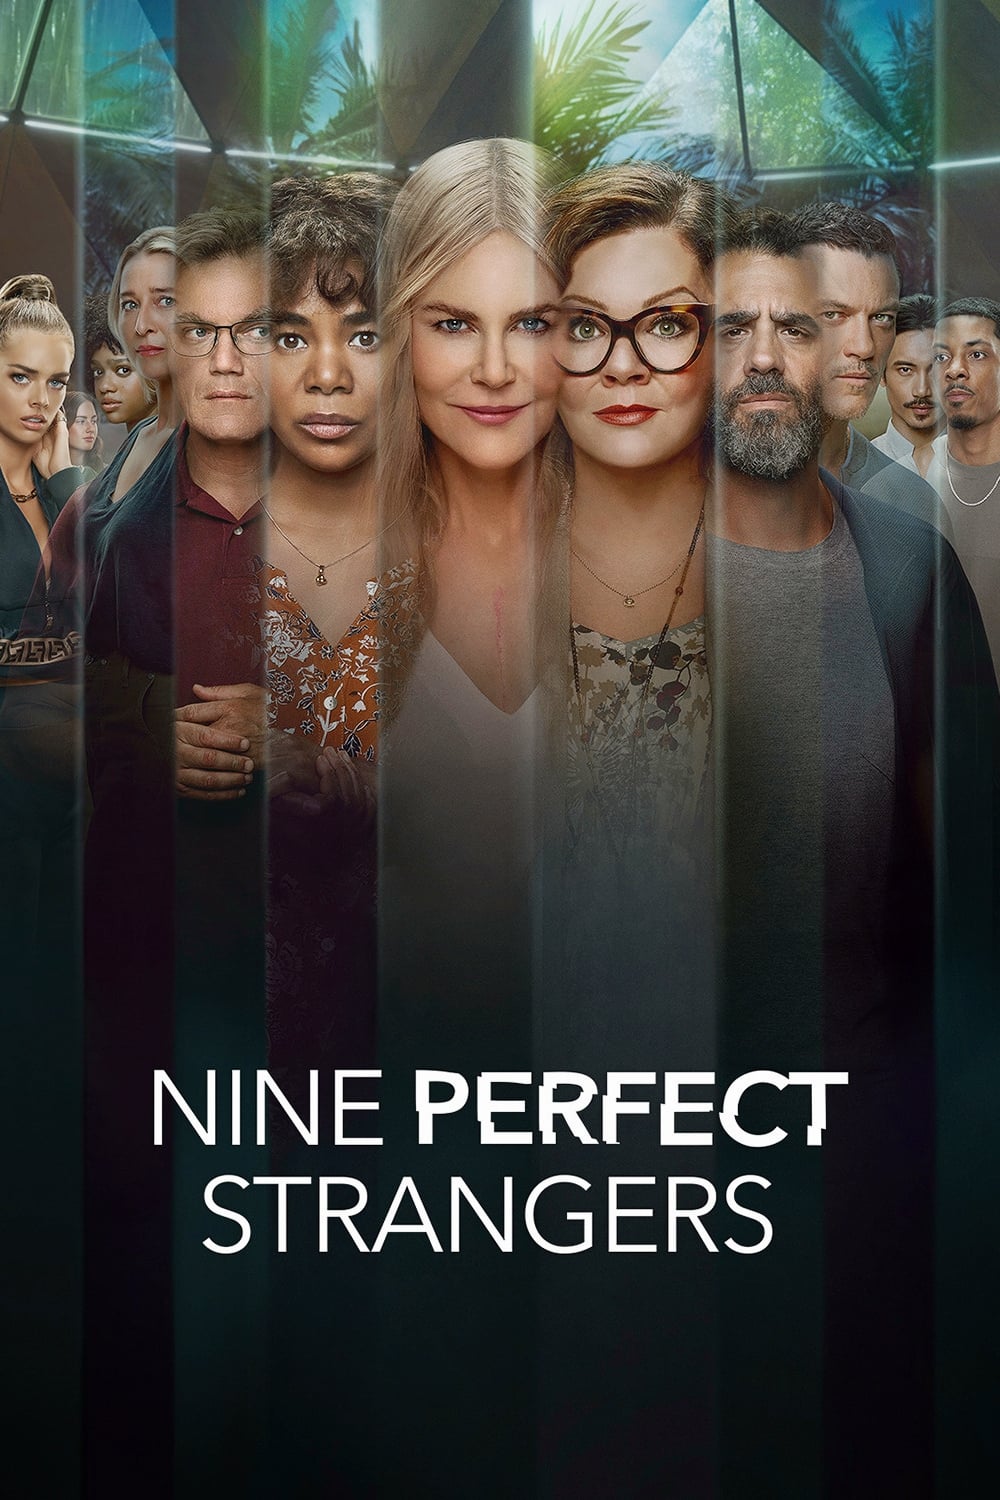 Nine Perfect Strangers rating